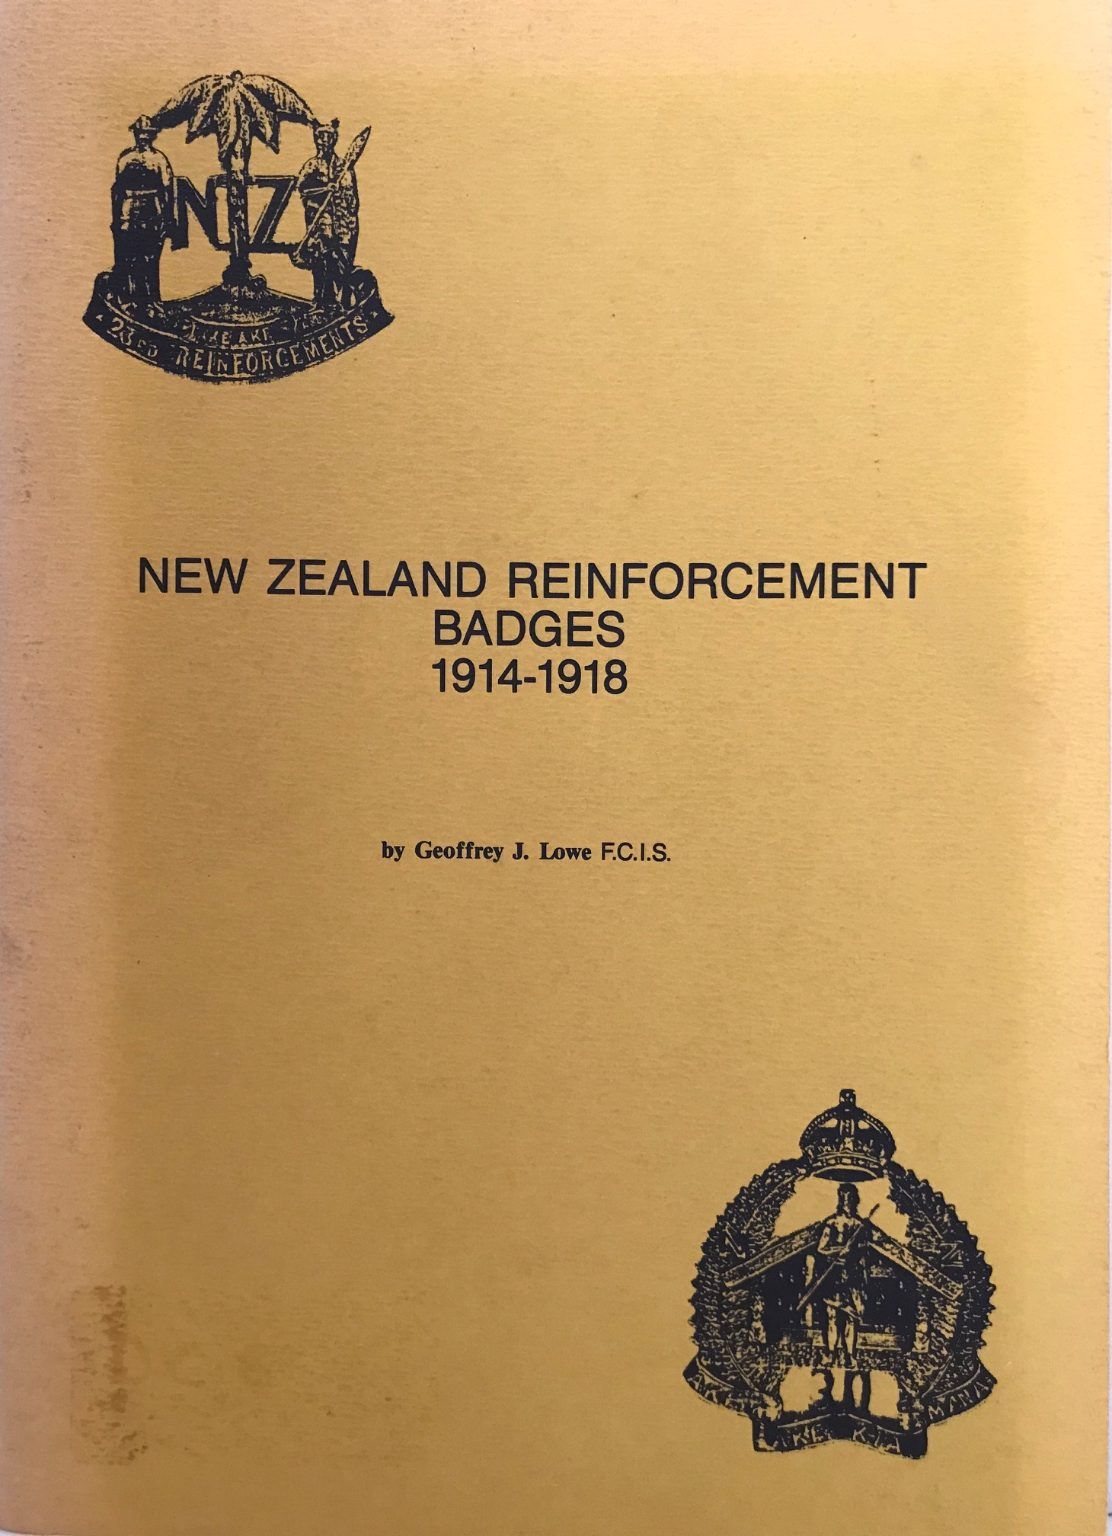 NEW ZEALAND REINFORCEMENT BADGES 1914-1918